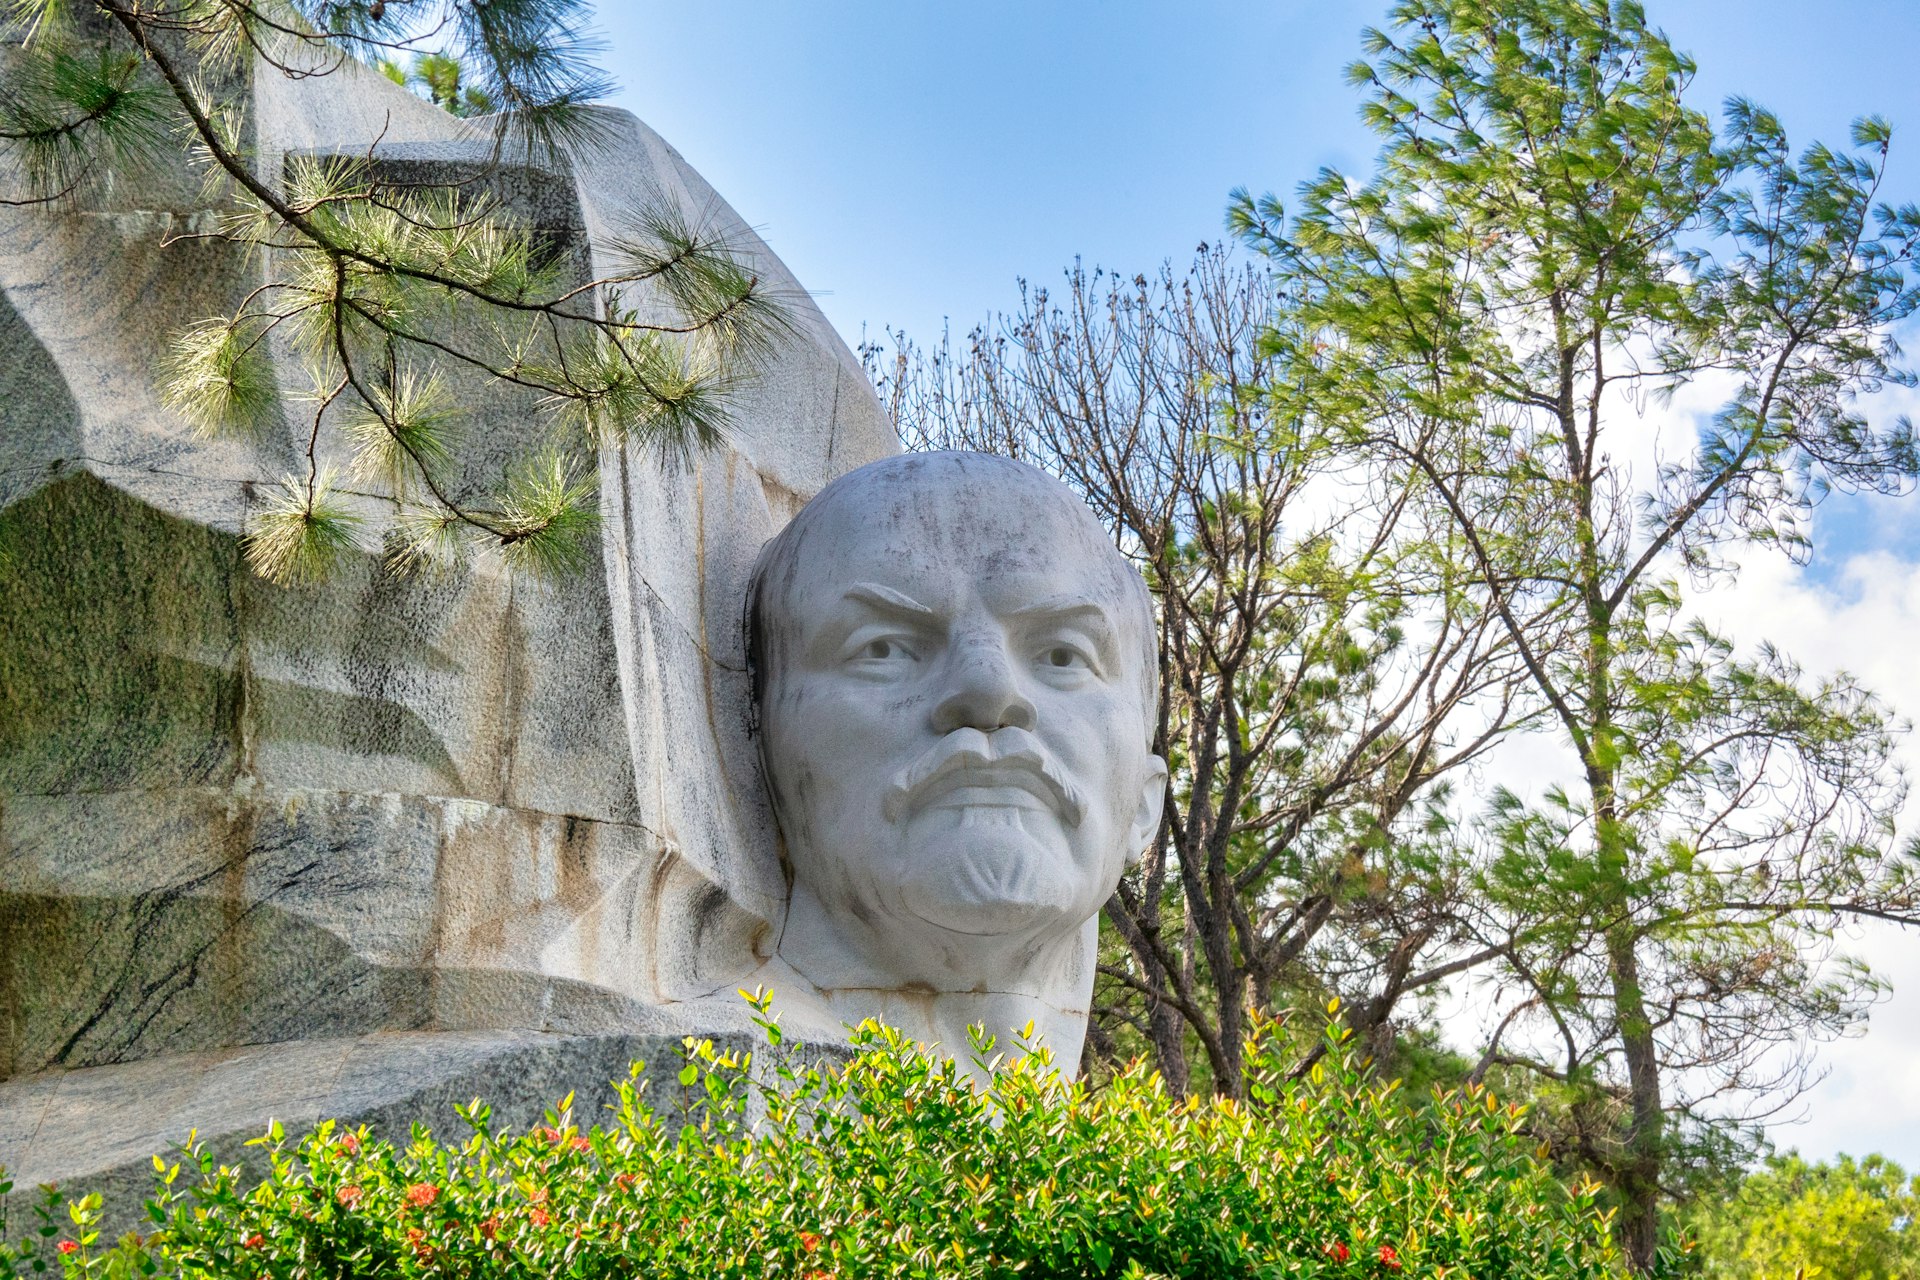 Statue of Vladimir Lenin in Parque Lenin in Havana